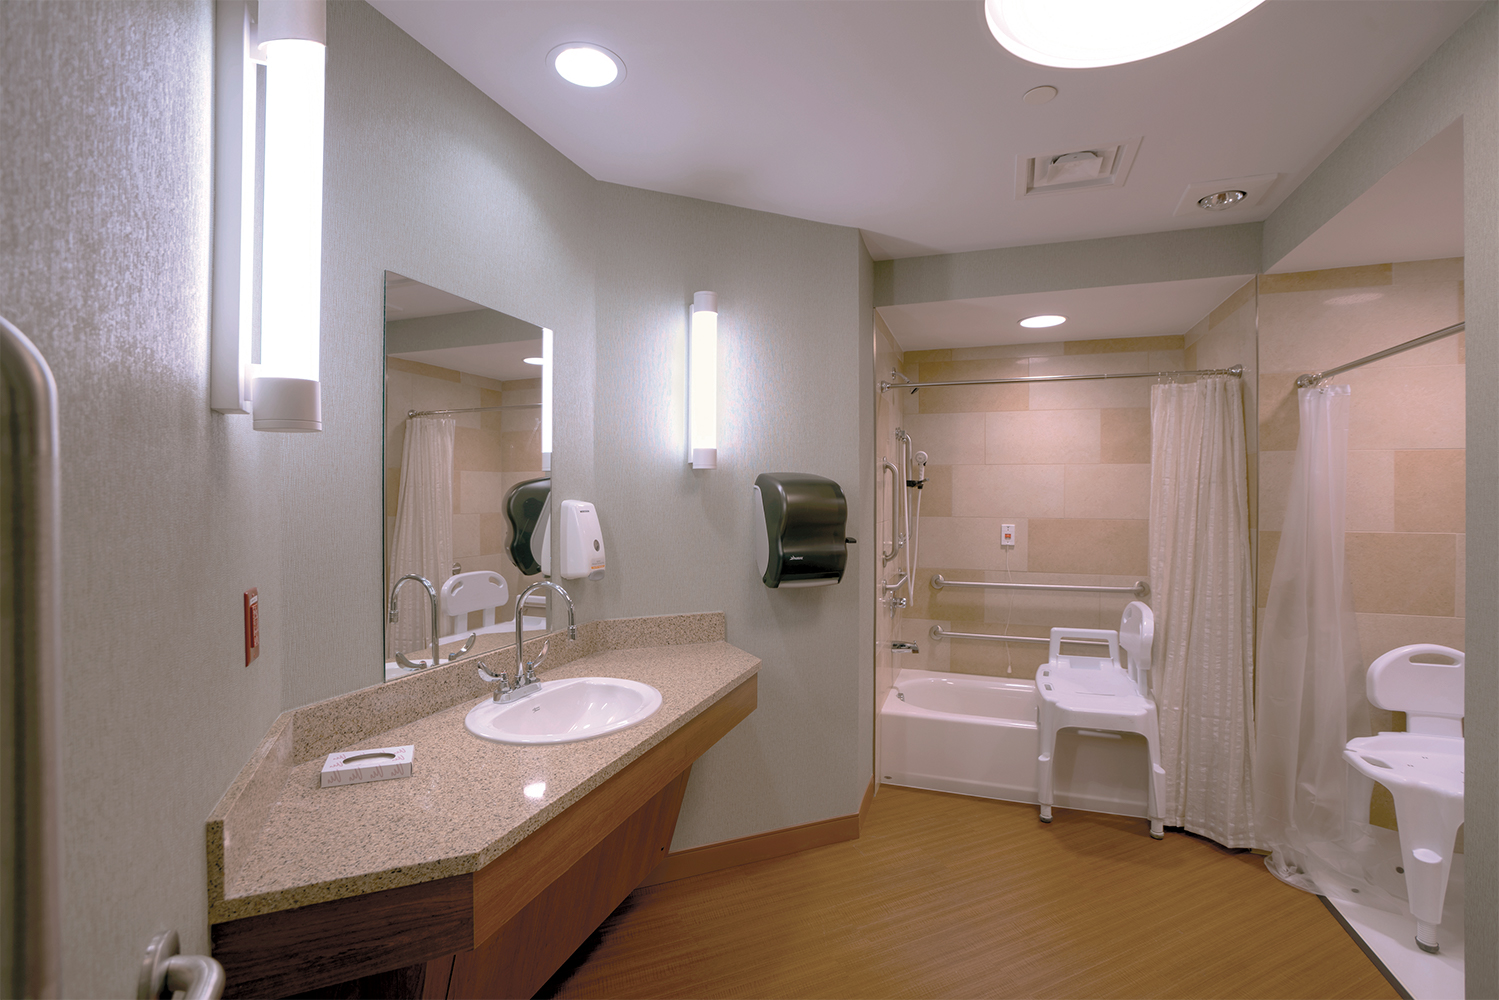 Asta modern vanity light fixtures provide accurate, stylish light for a nursing center bathroom.